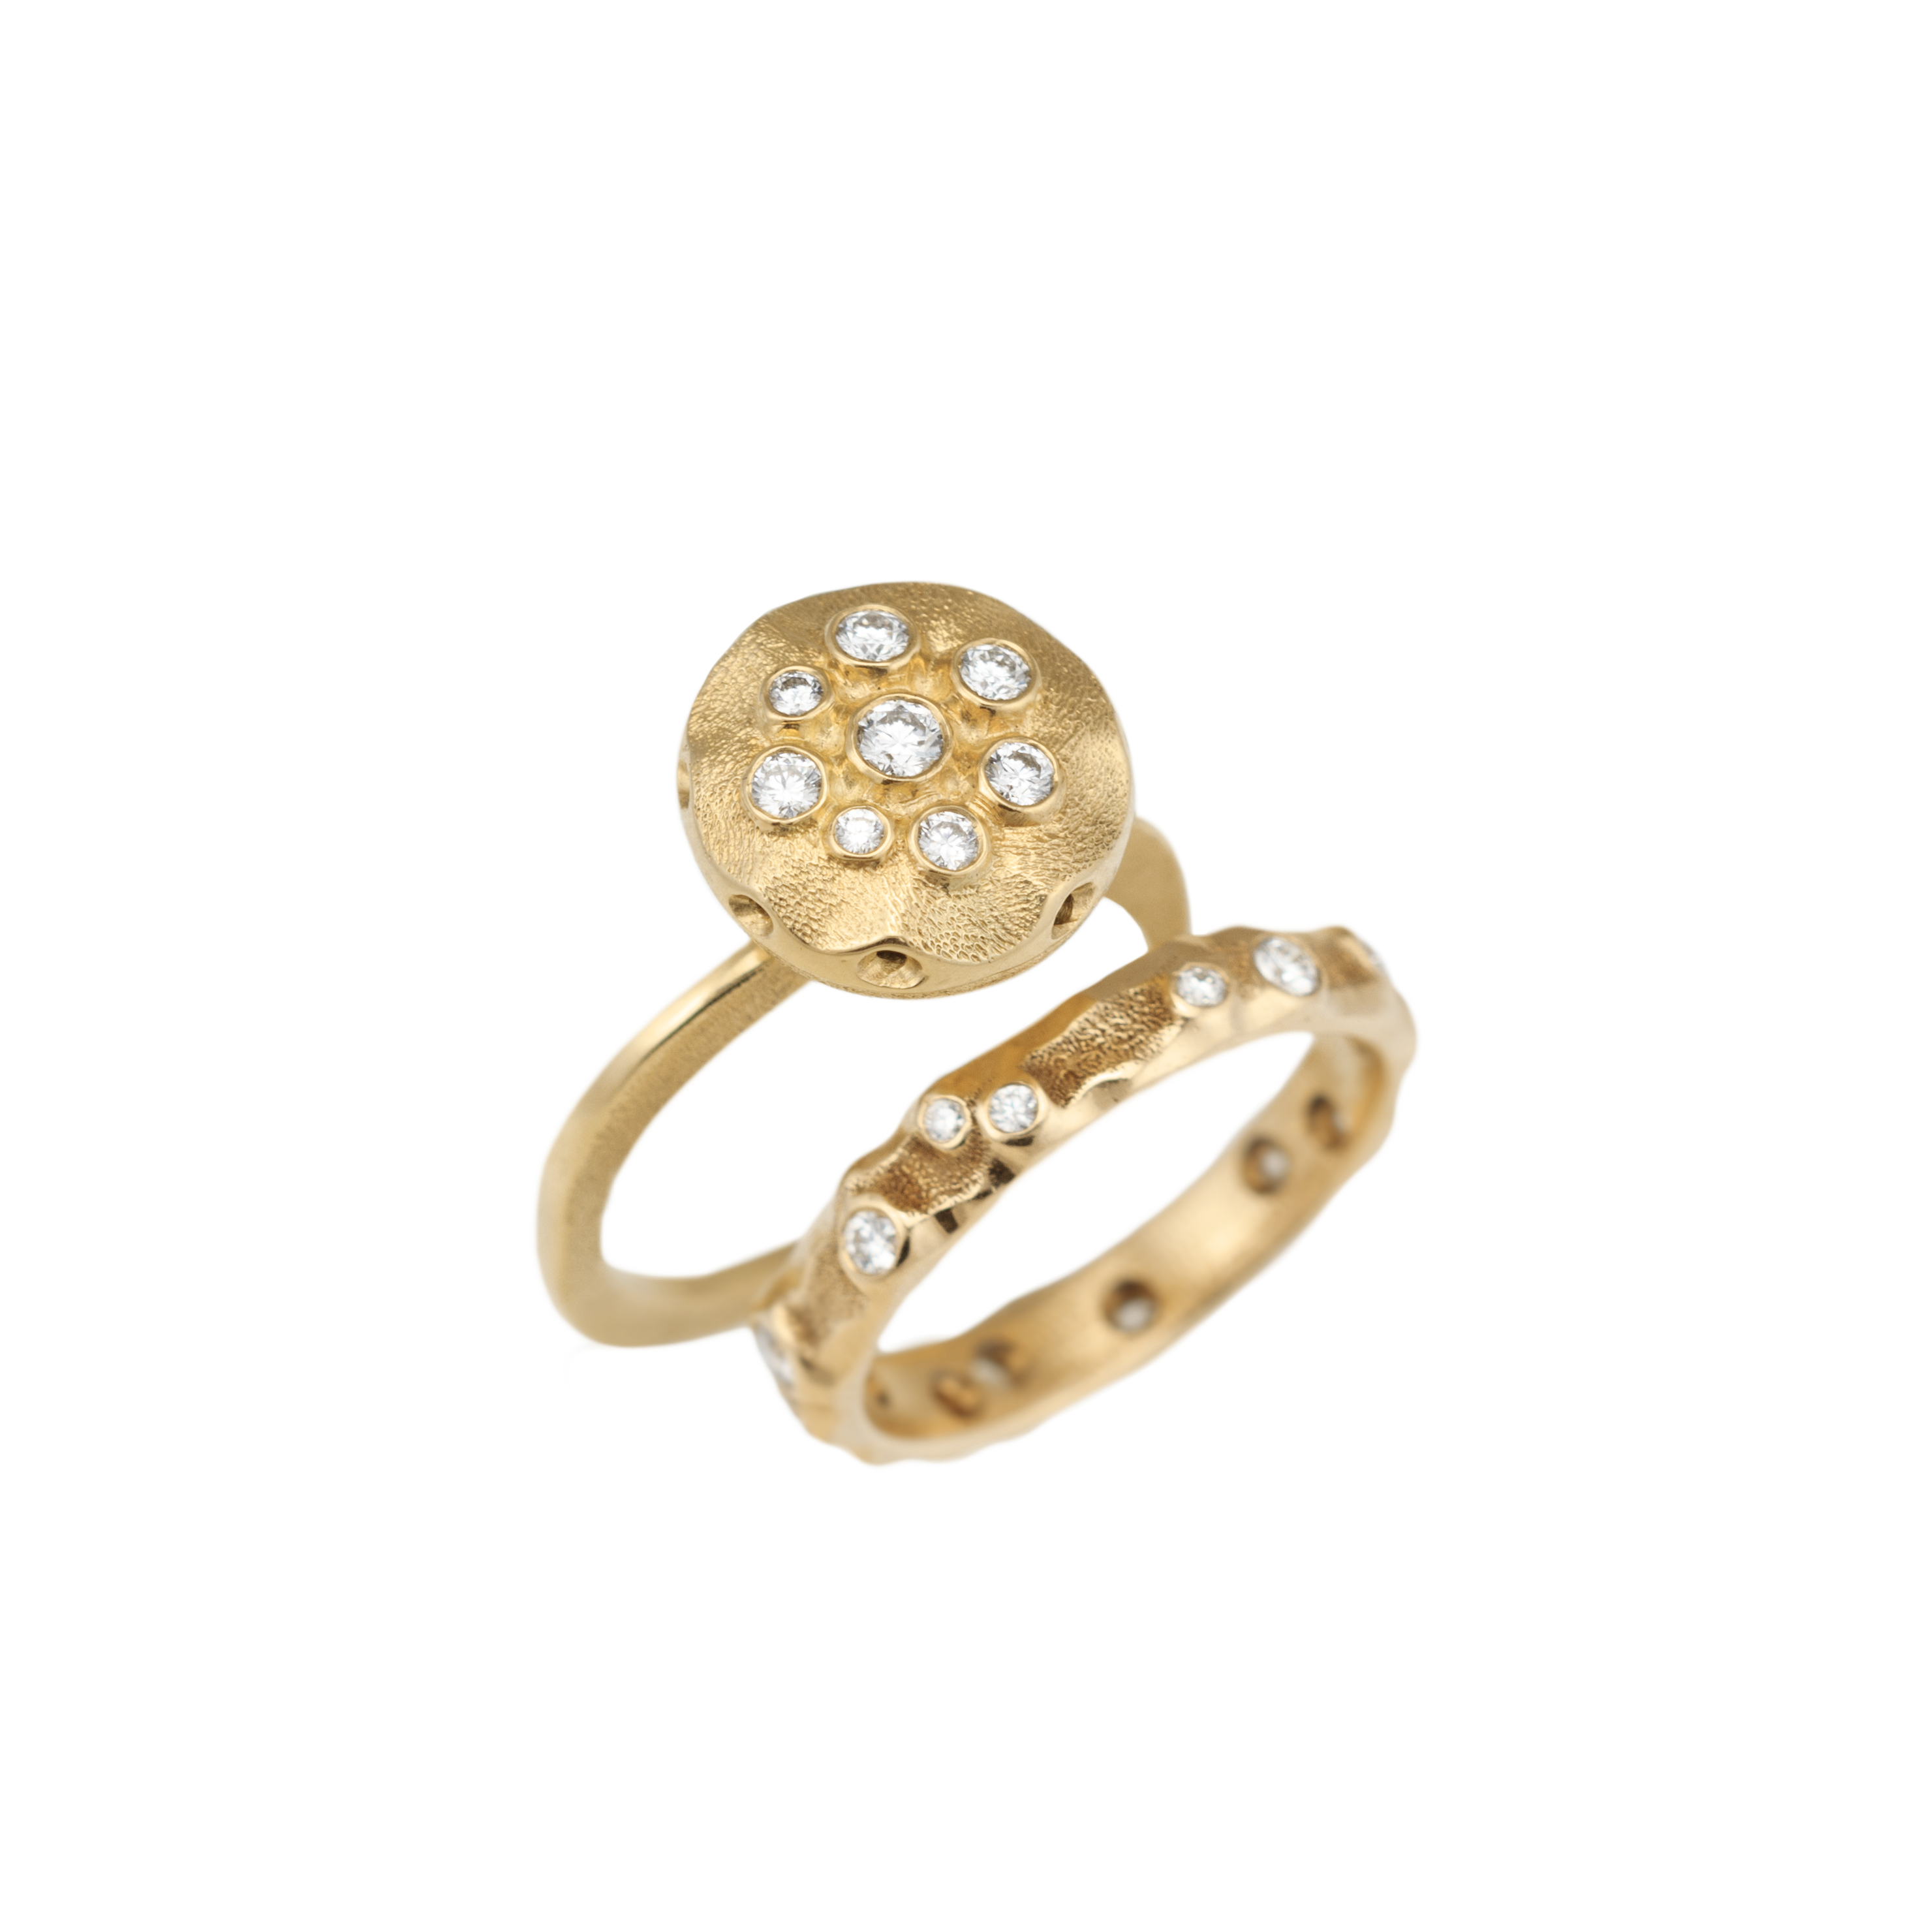 Desert Flowers Bridal Ring Set by Audrius Krulis. 18K Yellow Gold and Diamonds